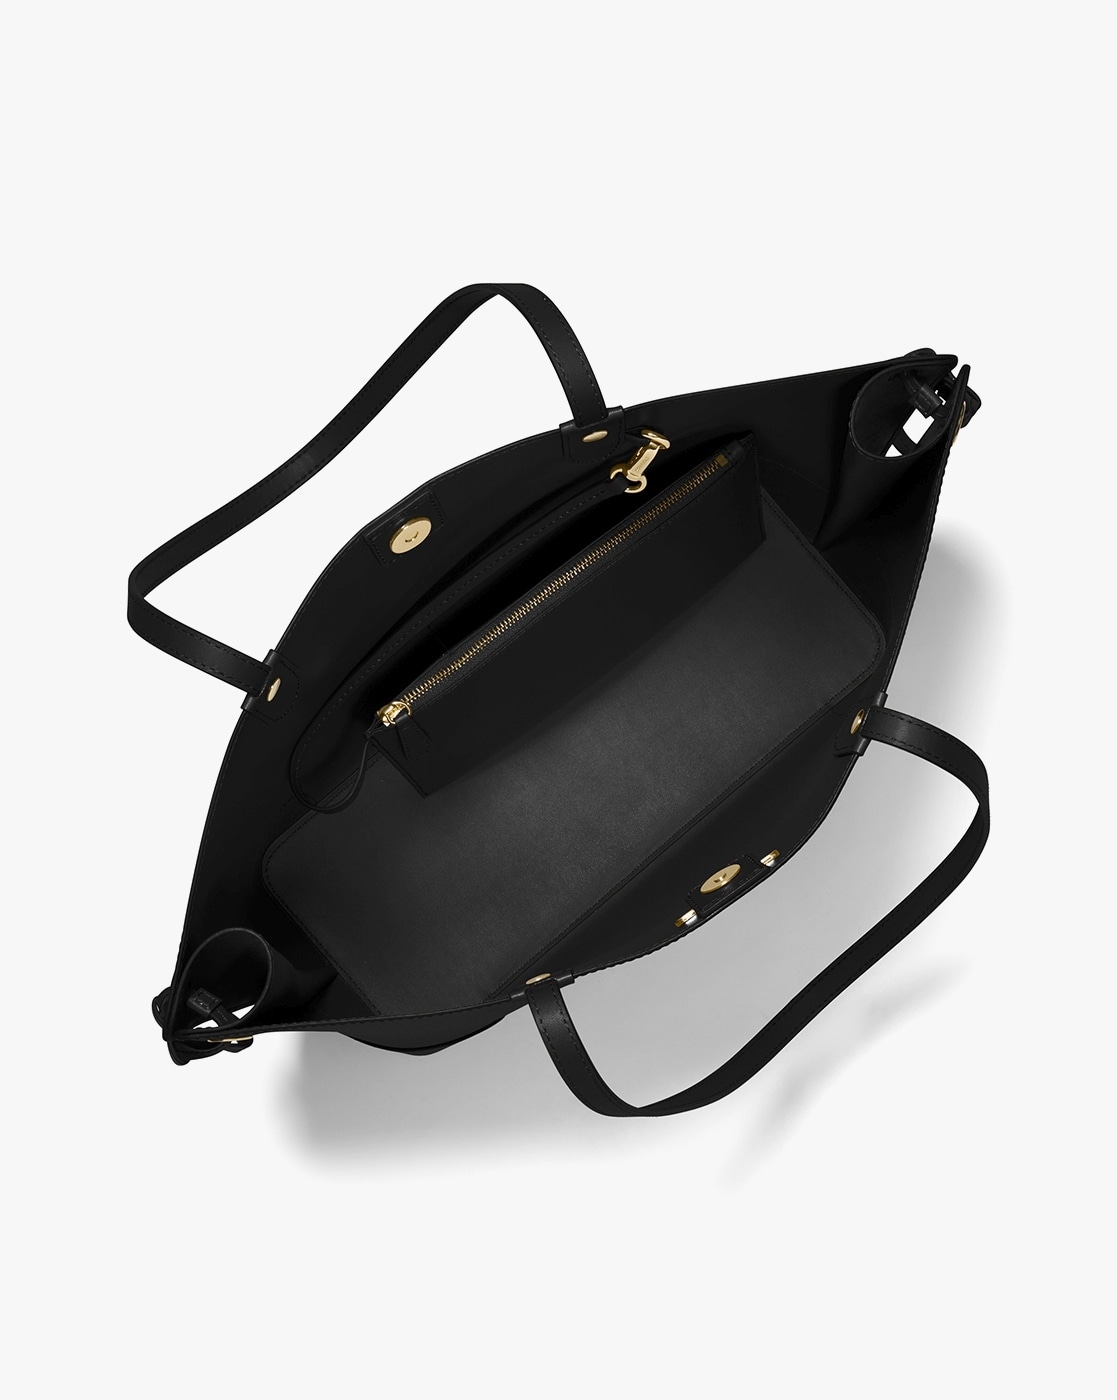 Michael Kors - Edith Large Saffiano Leather Tote Bag